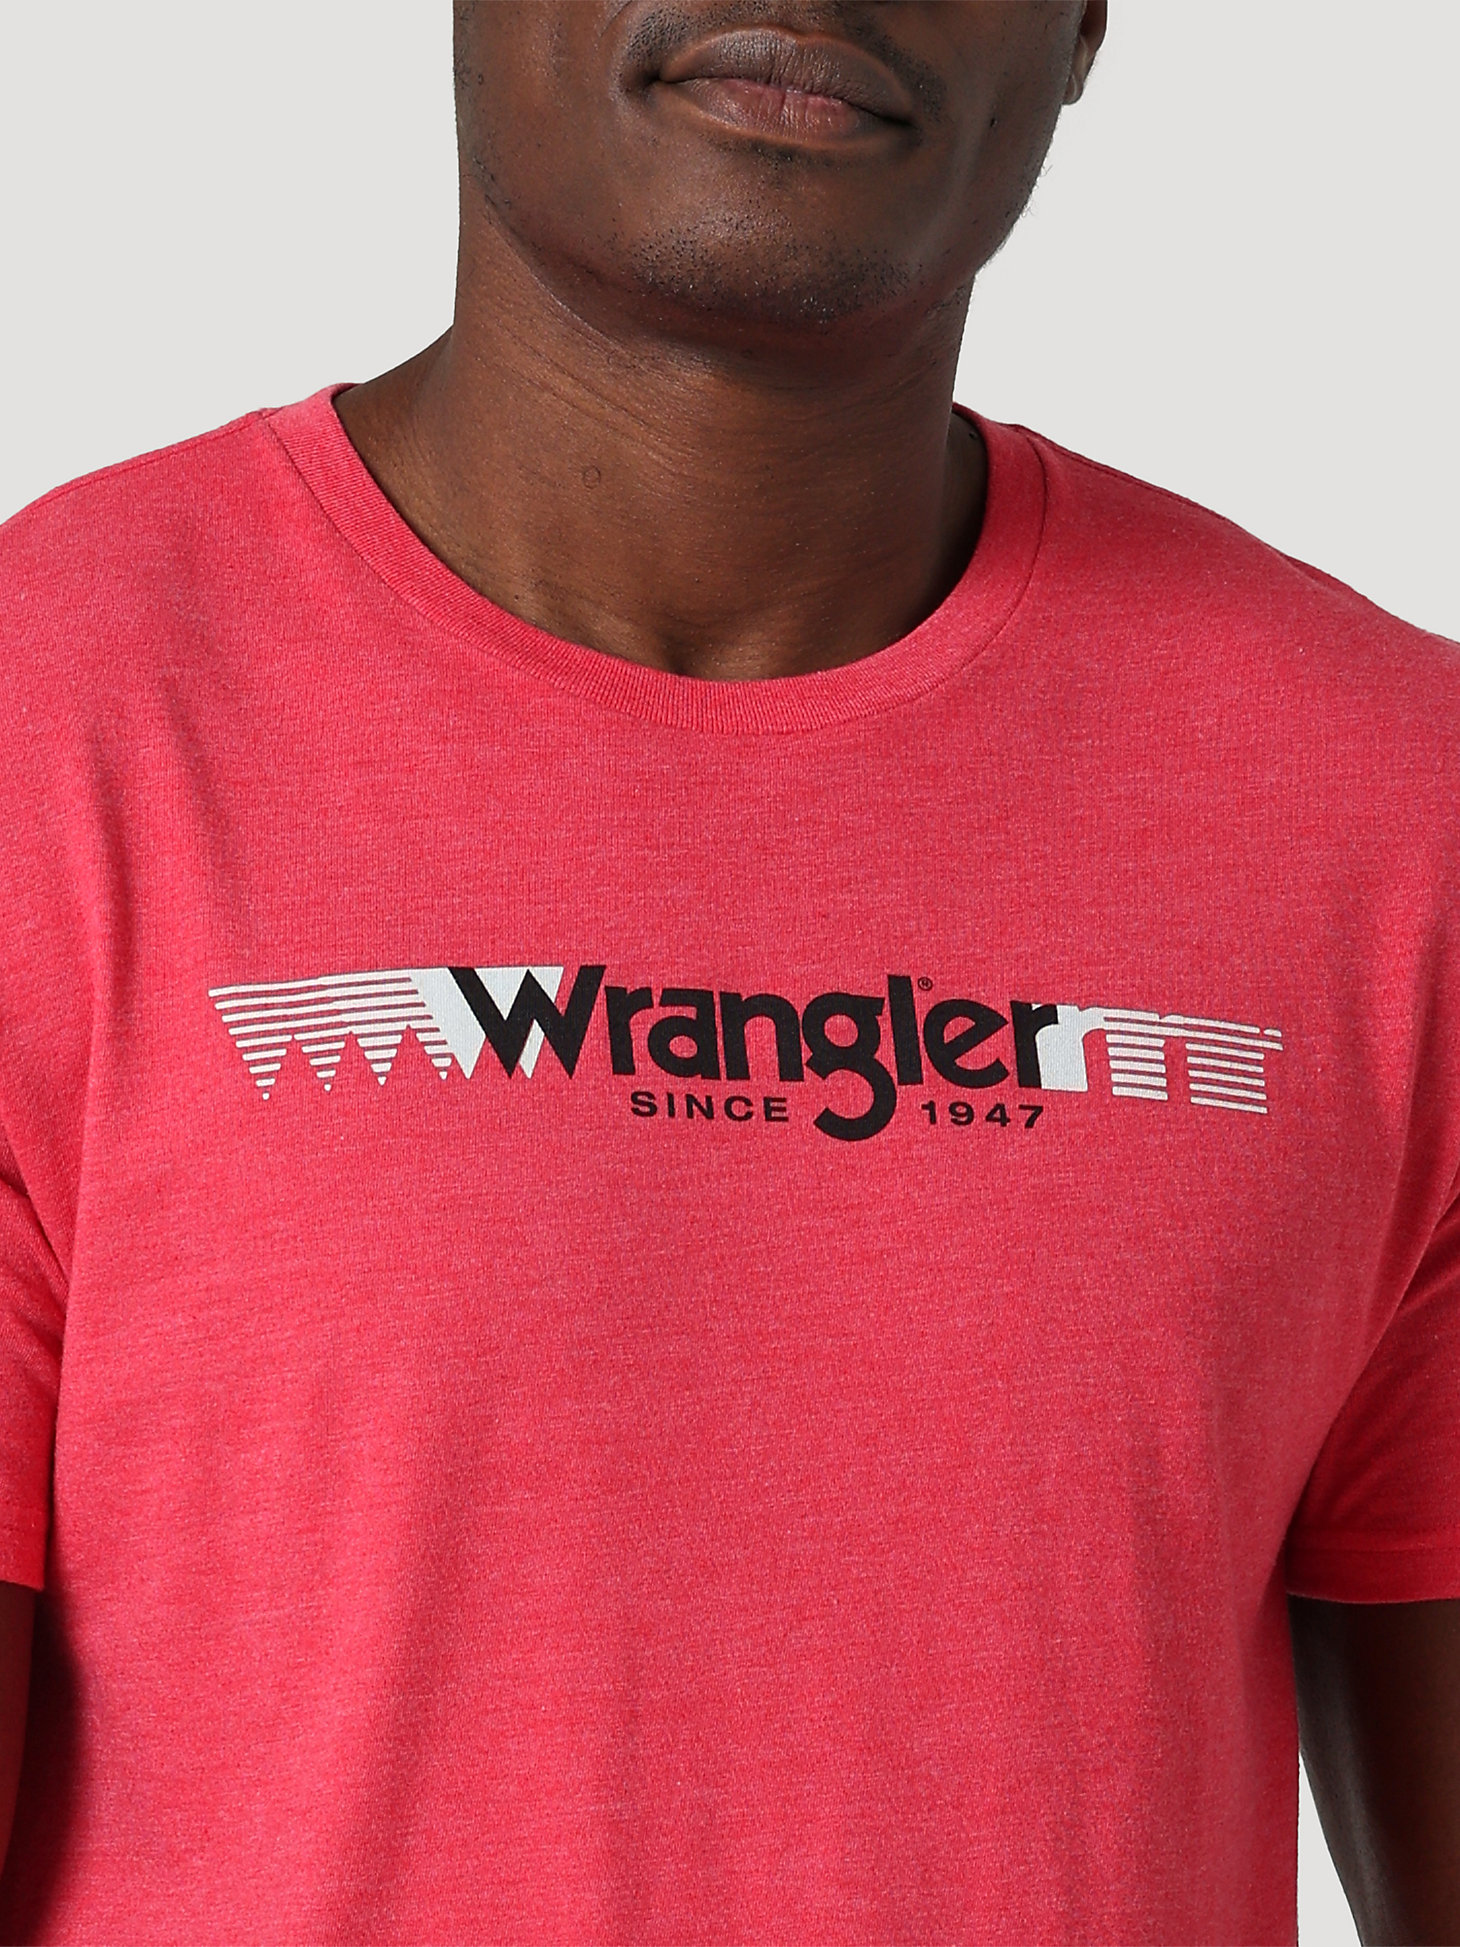 Men's Wrangler Logo Blur T-Shirt in Red Heather alternative view 1